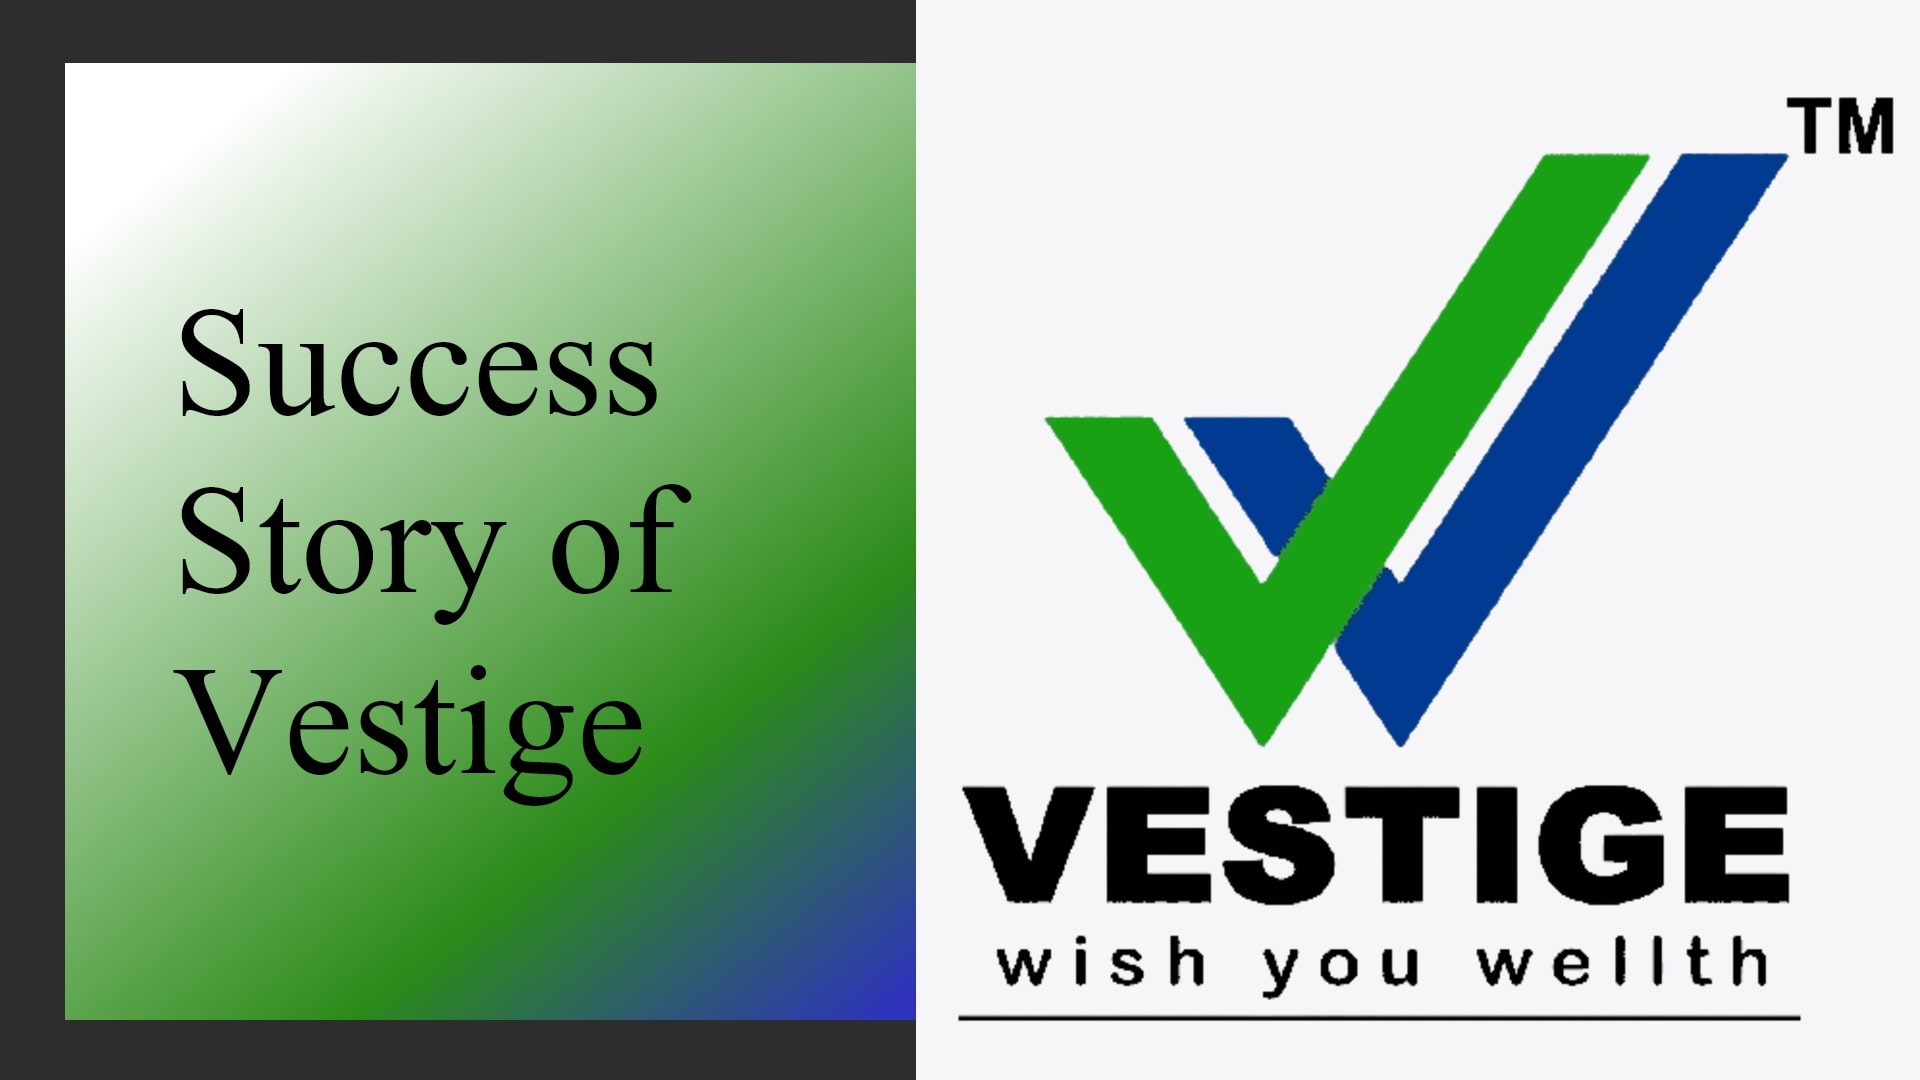 Vestiage Success Story